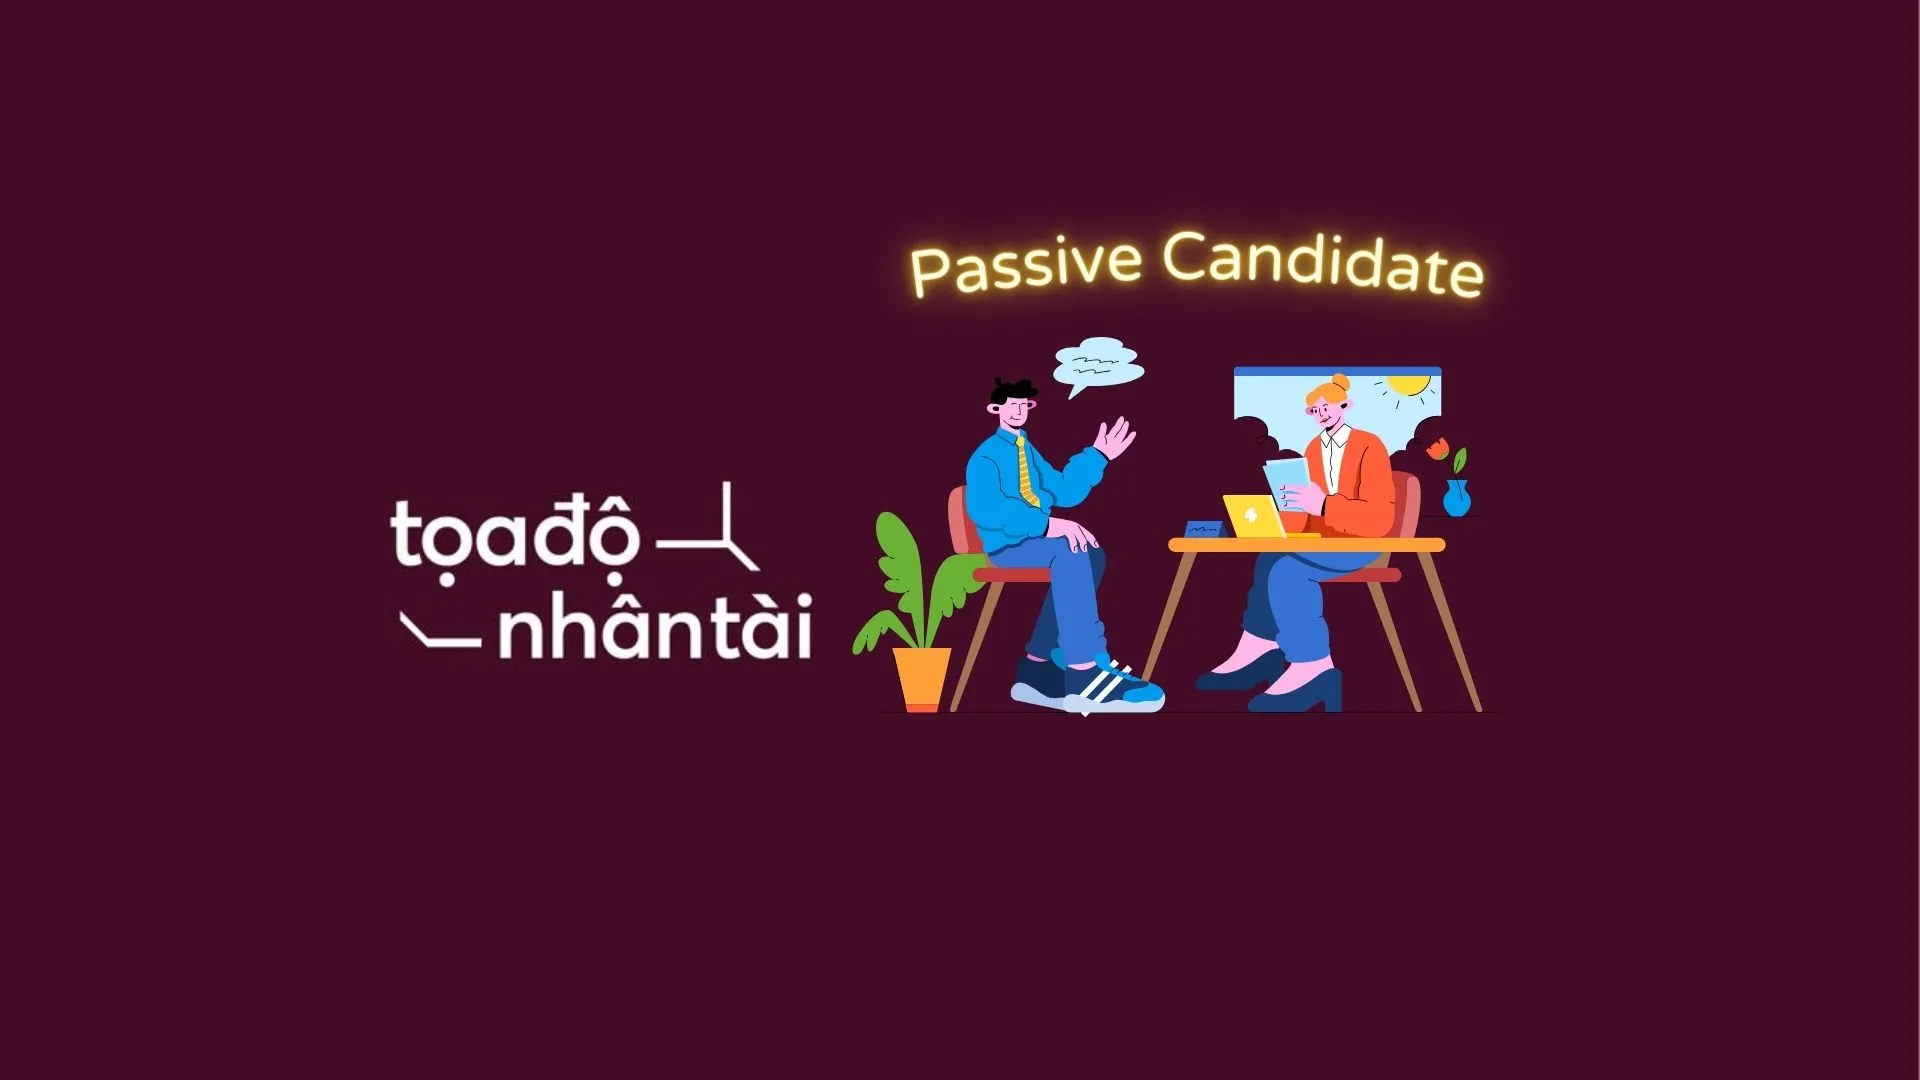 Passive candidate